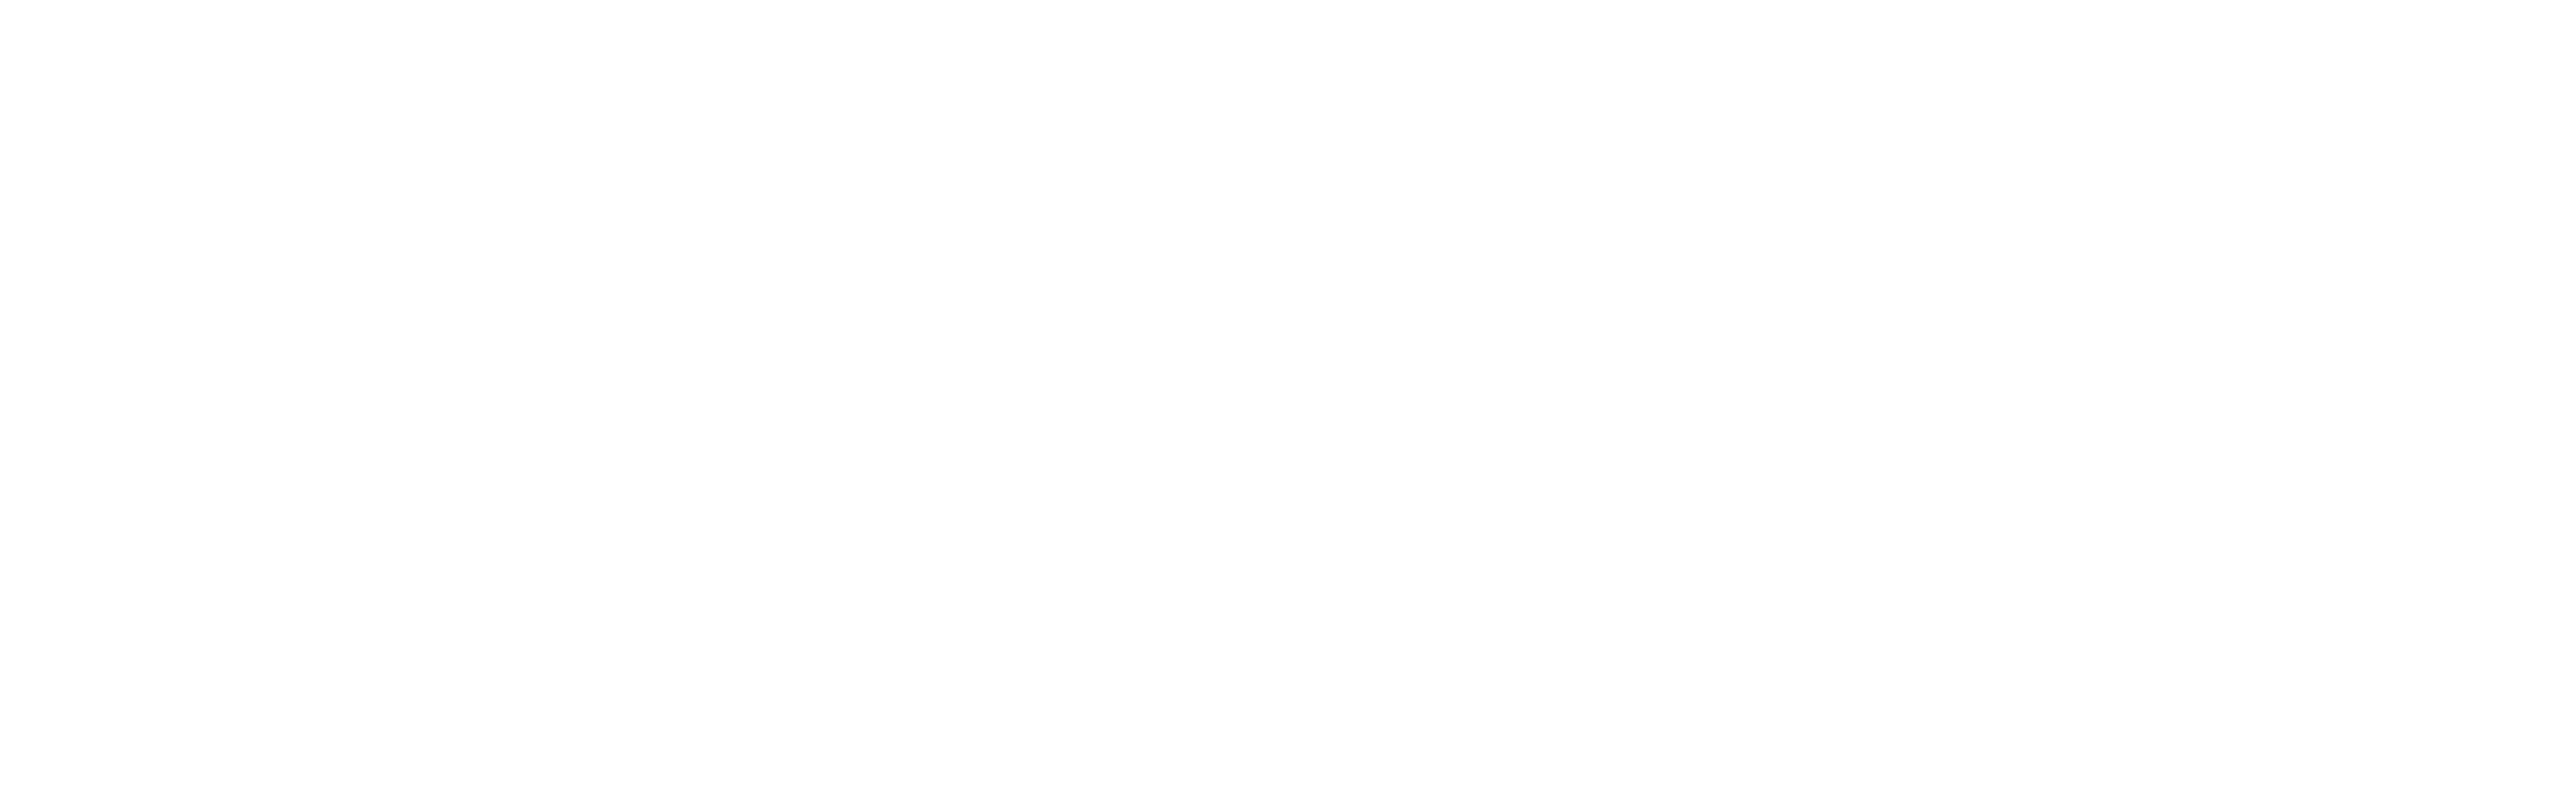 Sterling State Bank Blog